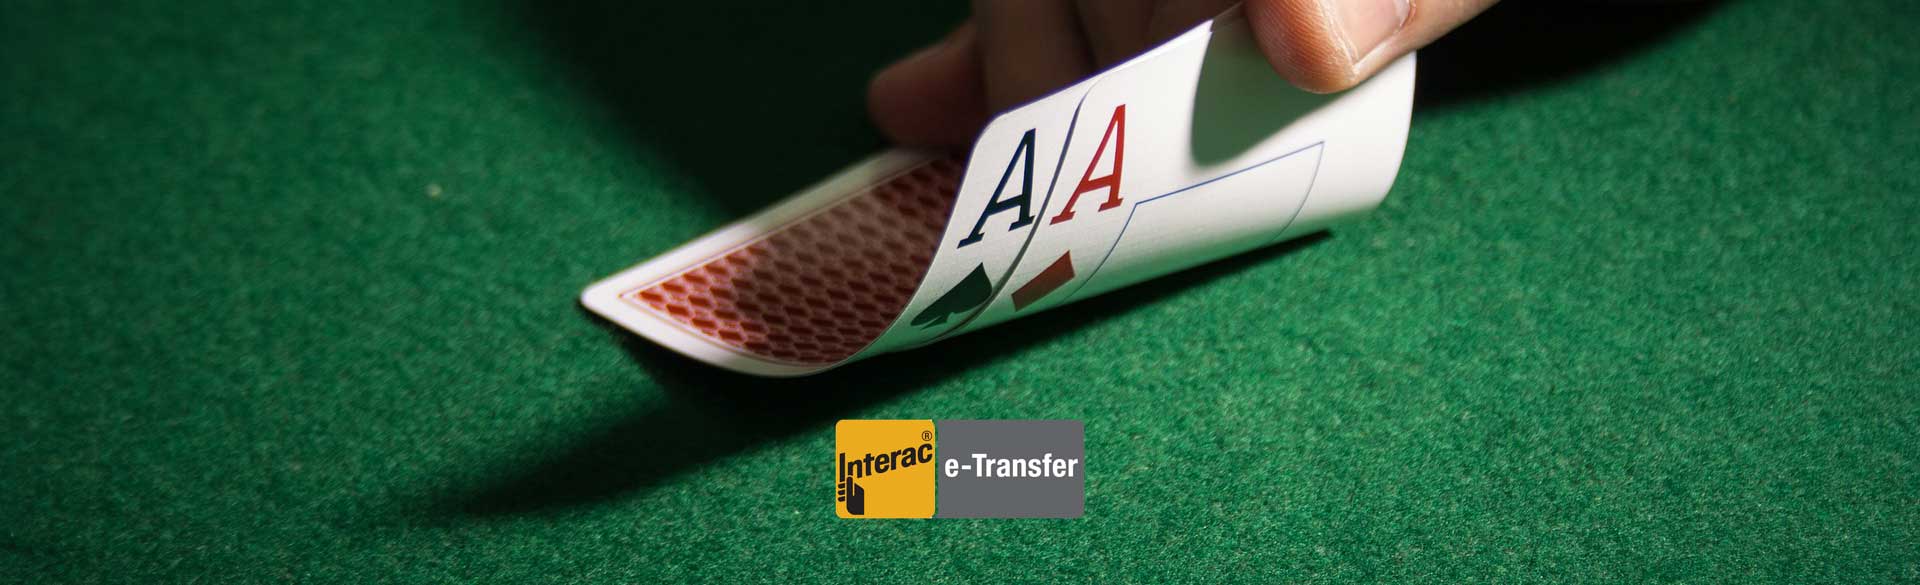 Interac Online & Interac e-Transfer Casinos 